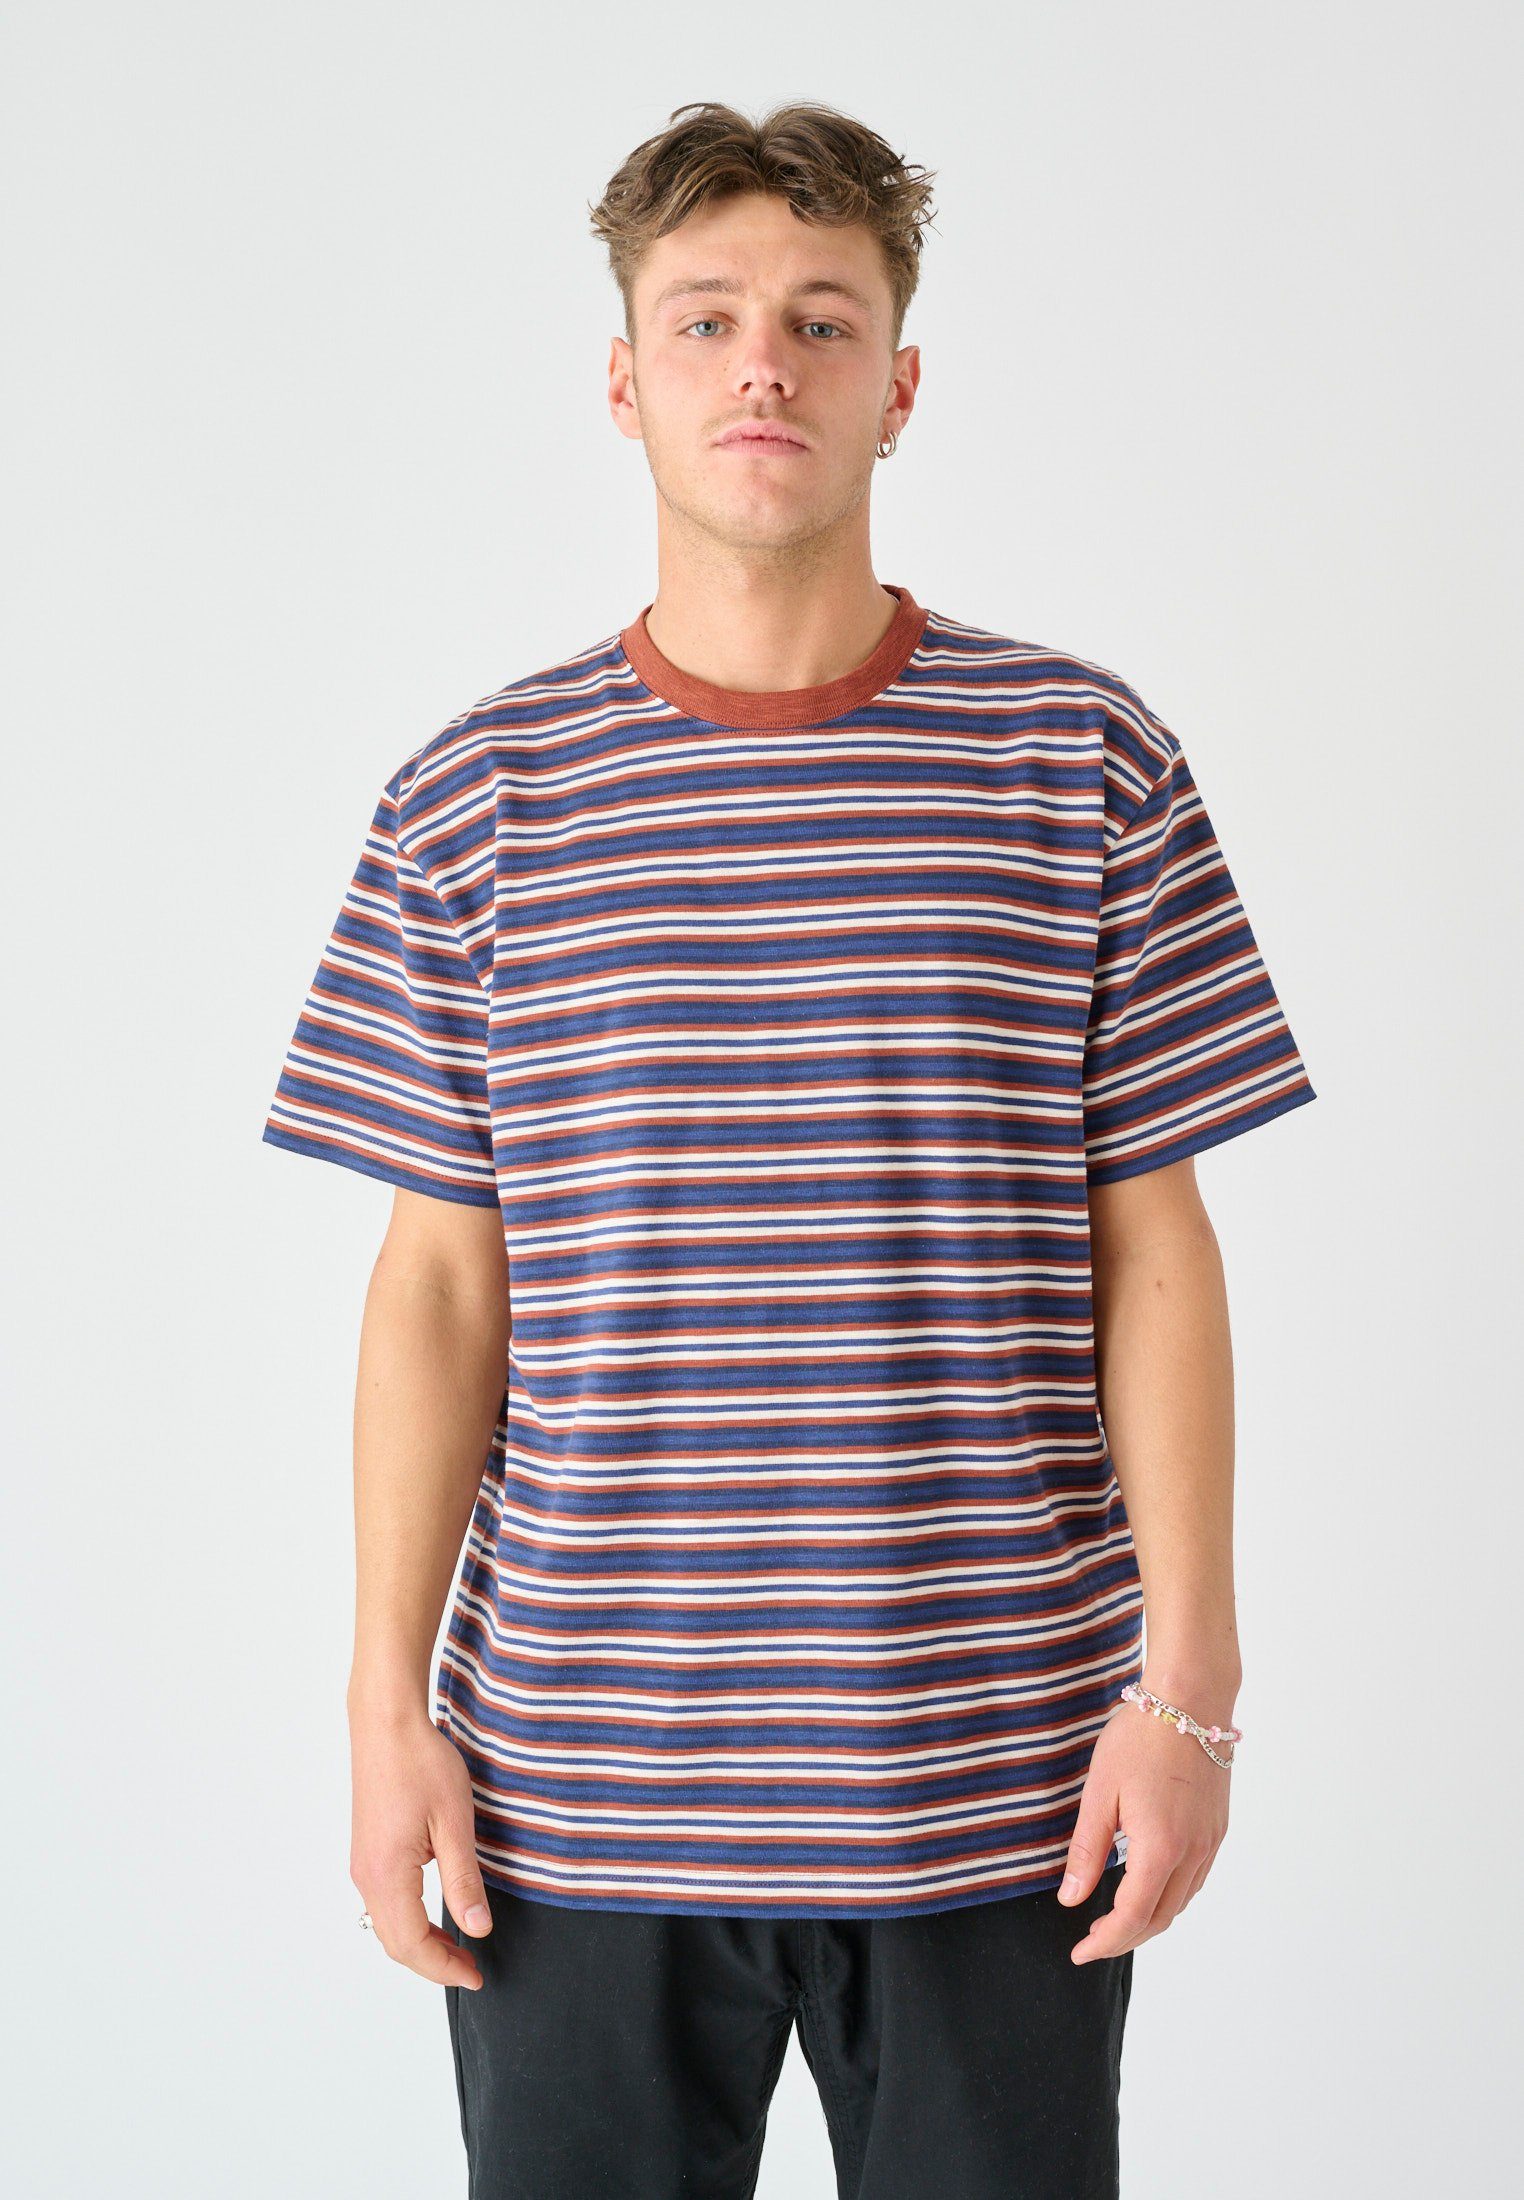 Cleptomanicx T-Shirt Hugger Stripe mit trendigem Streifenmuster